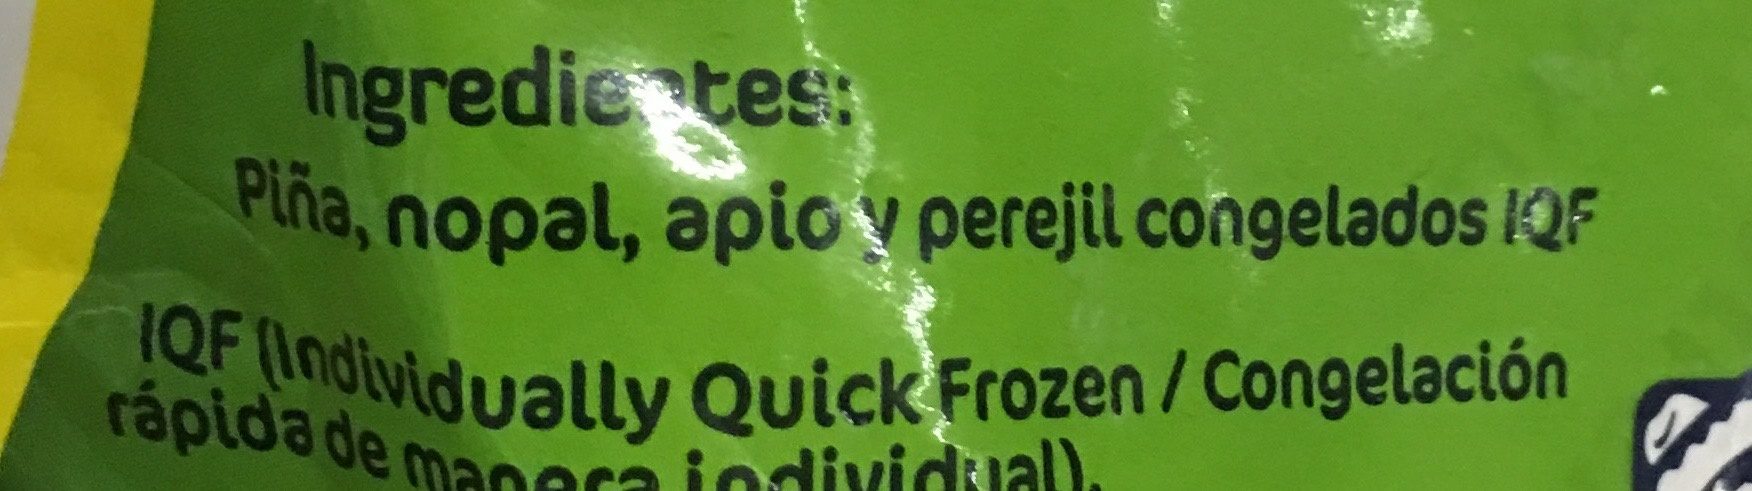 Jugo Vita Verde Freezer Fruits 600 G